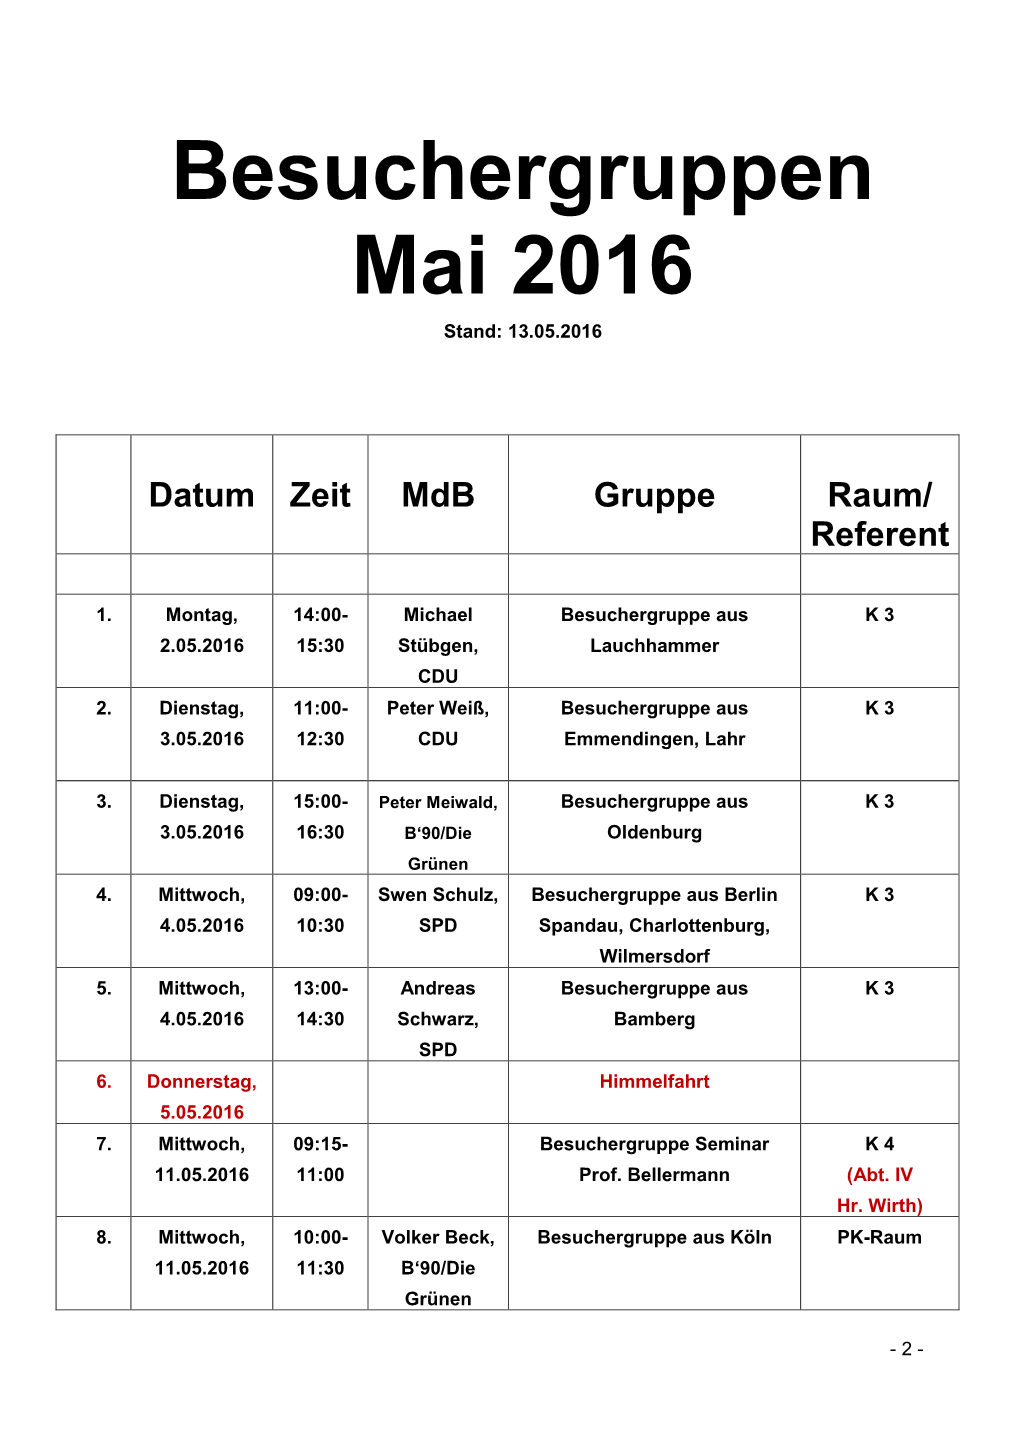 Besuchergruppen Mai 2016 Stand: 13.05.2016